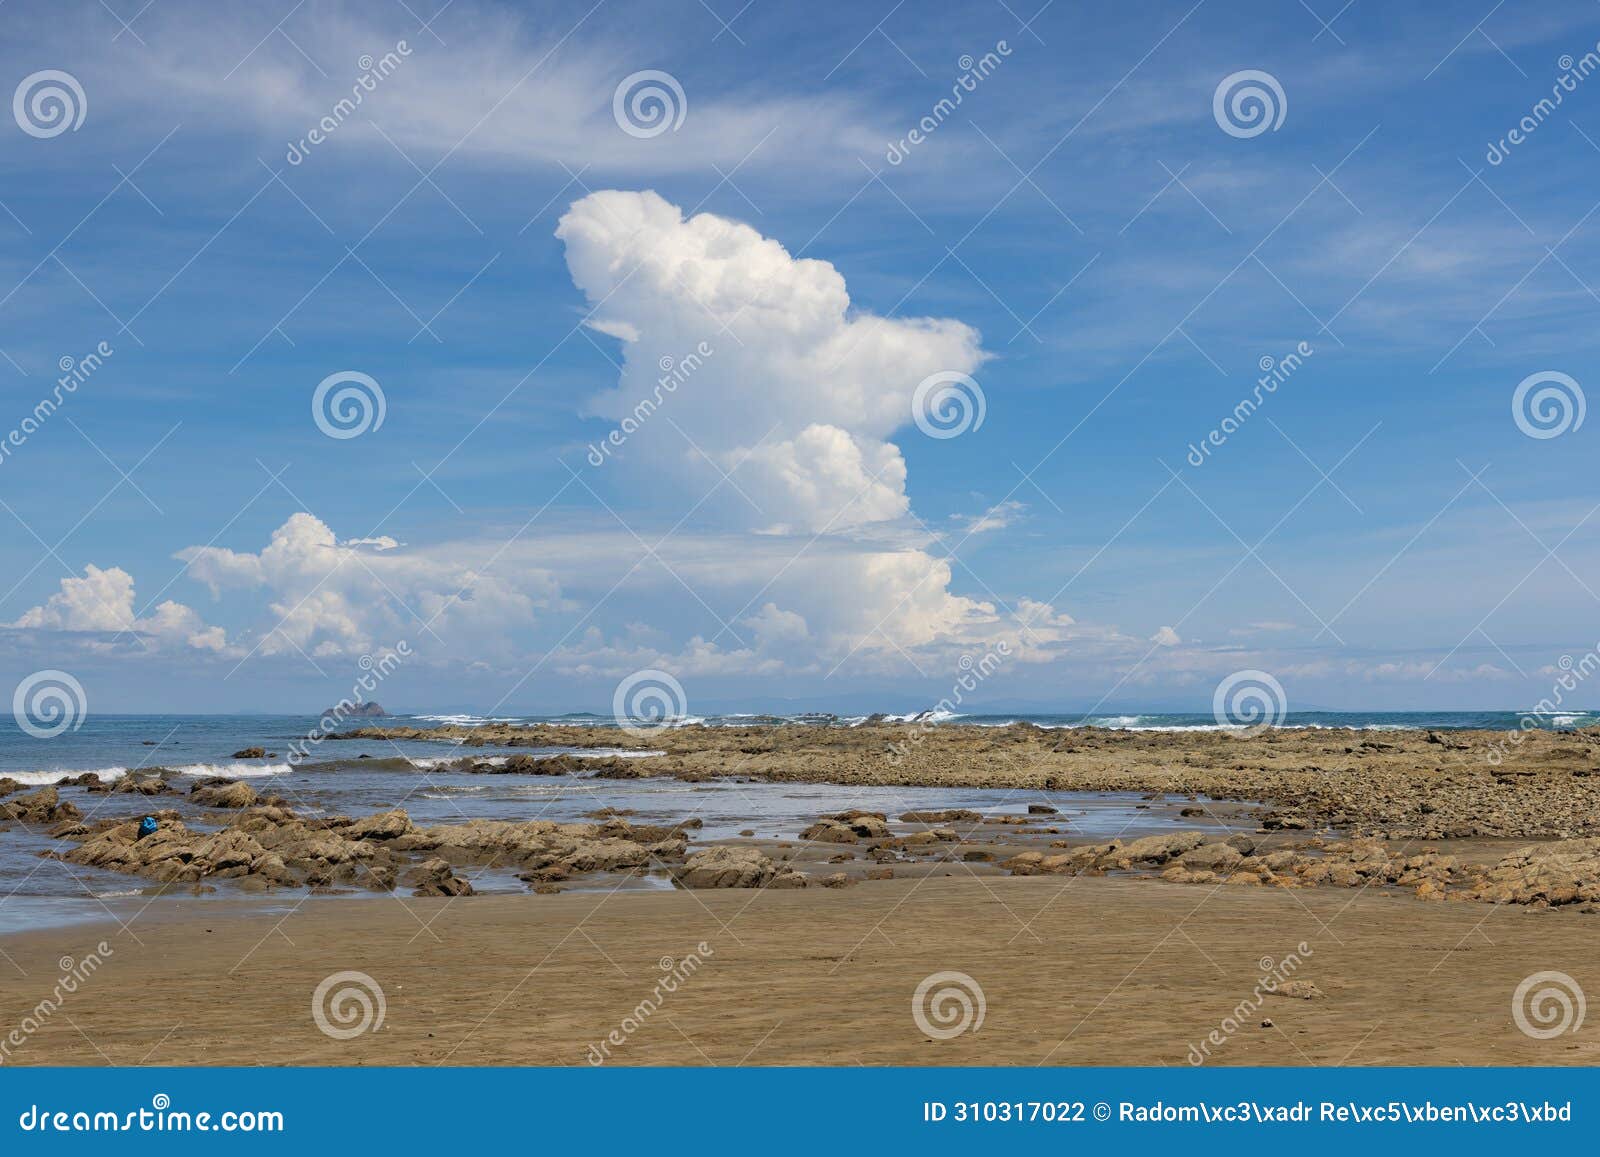 bahia ballena beach, popular beautiful beaches